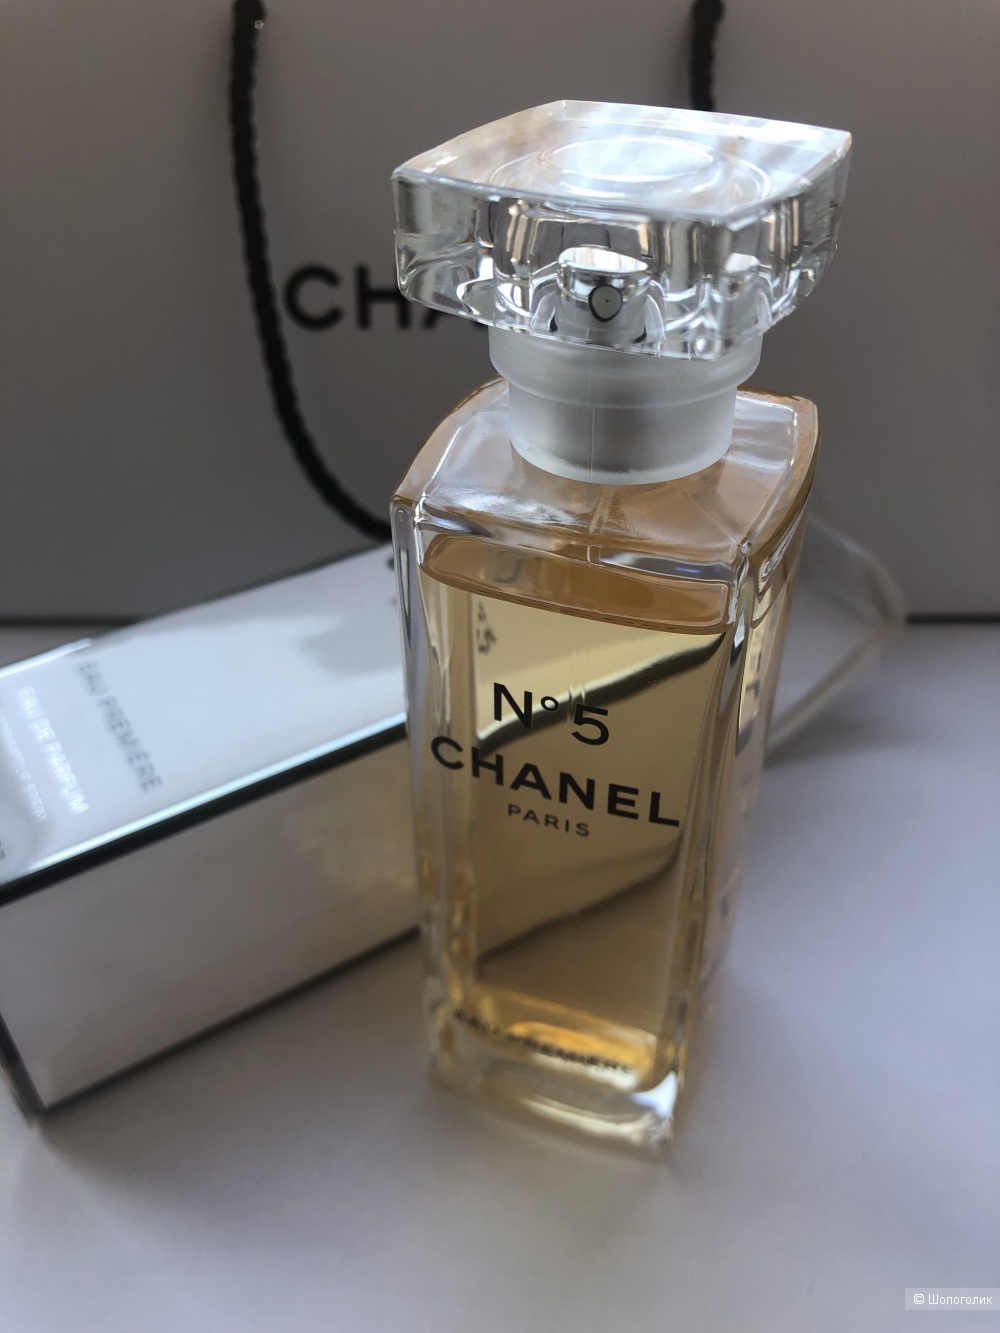 Chanel N° 5 EAU PREMIĒRE, 70 ml